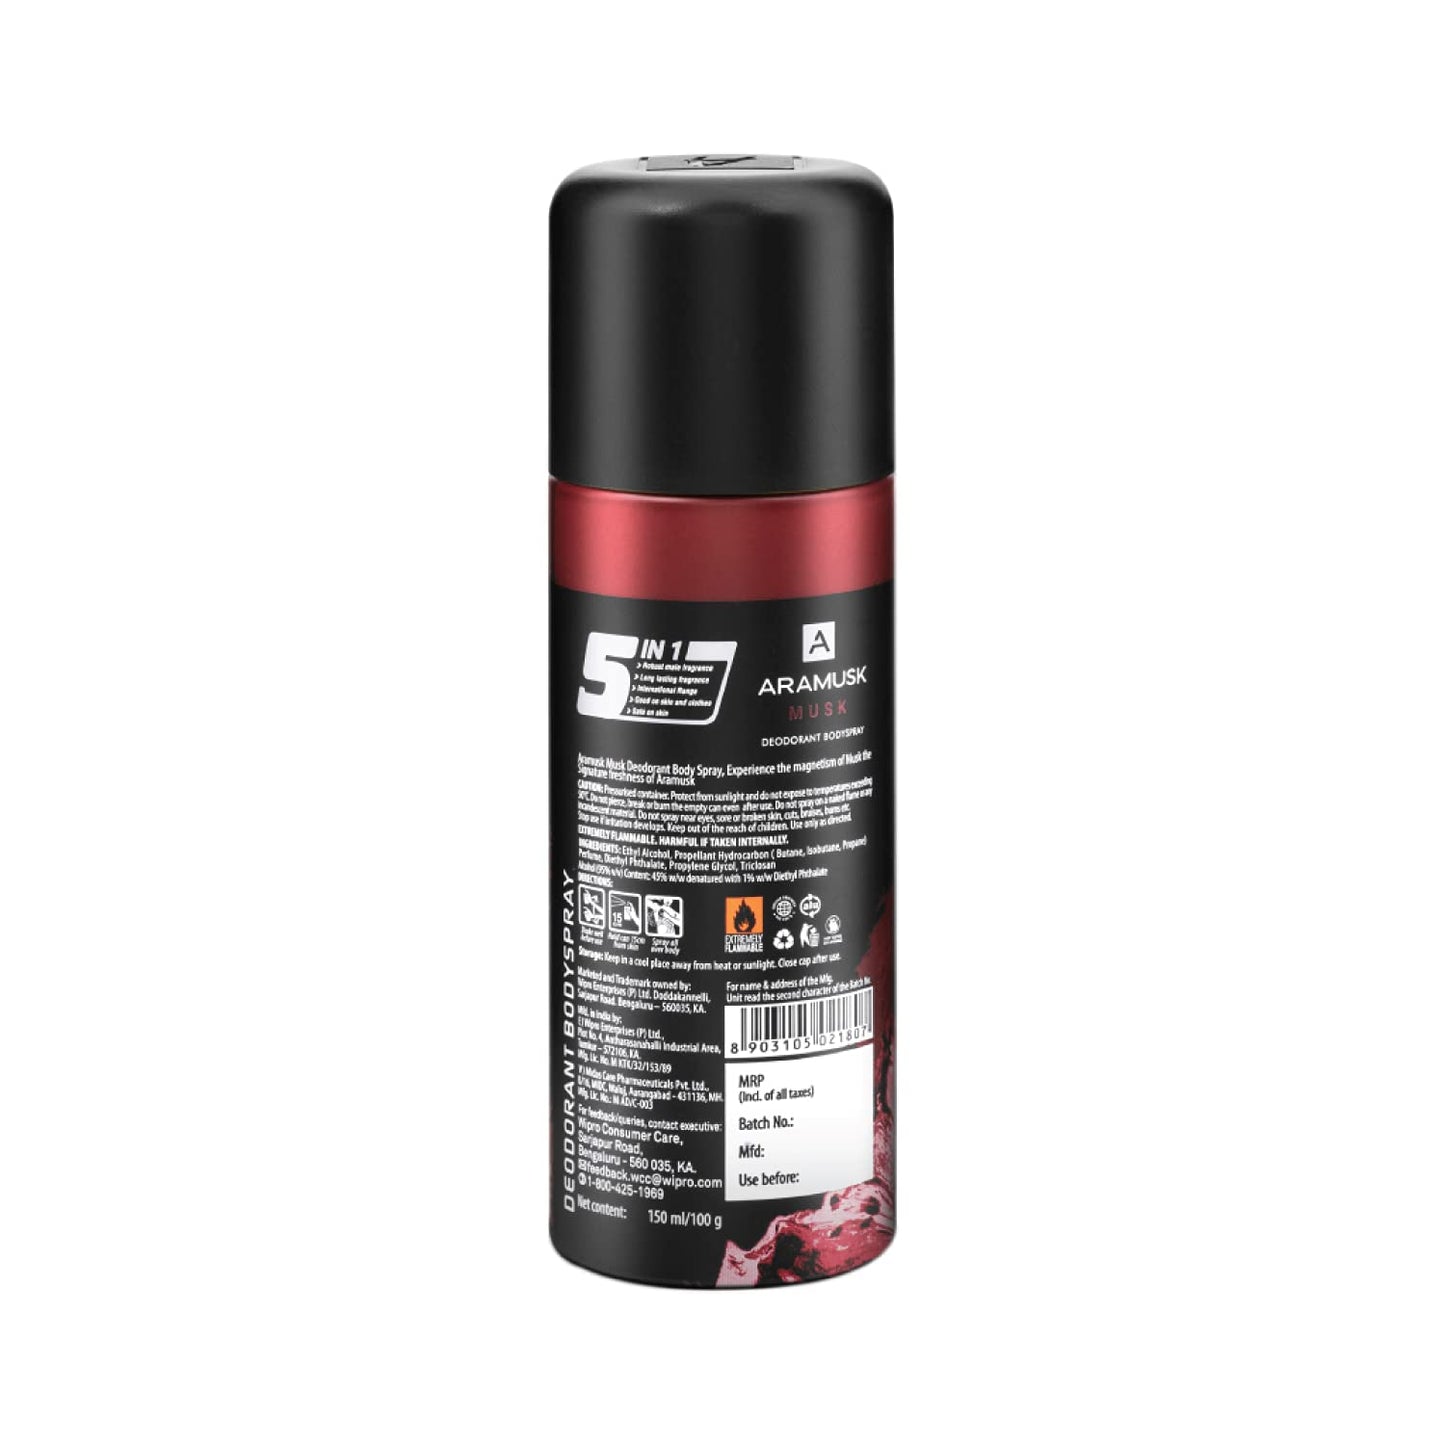 Aramusk Musk Deodorant Men Body Spray 150ml Pack Of 3